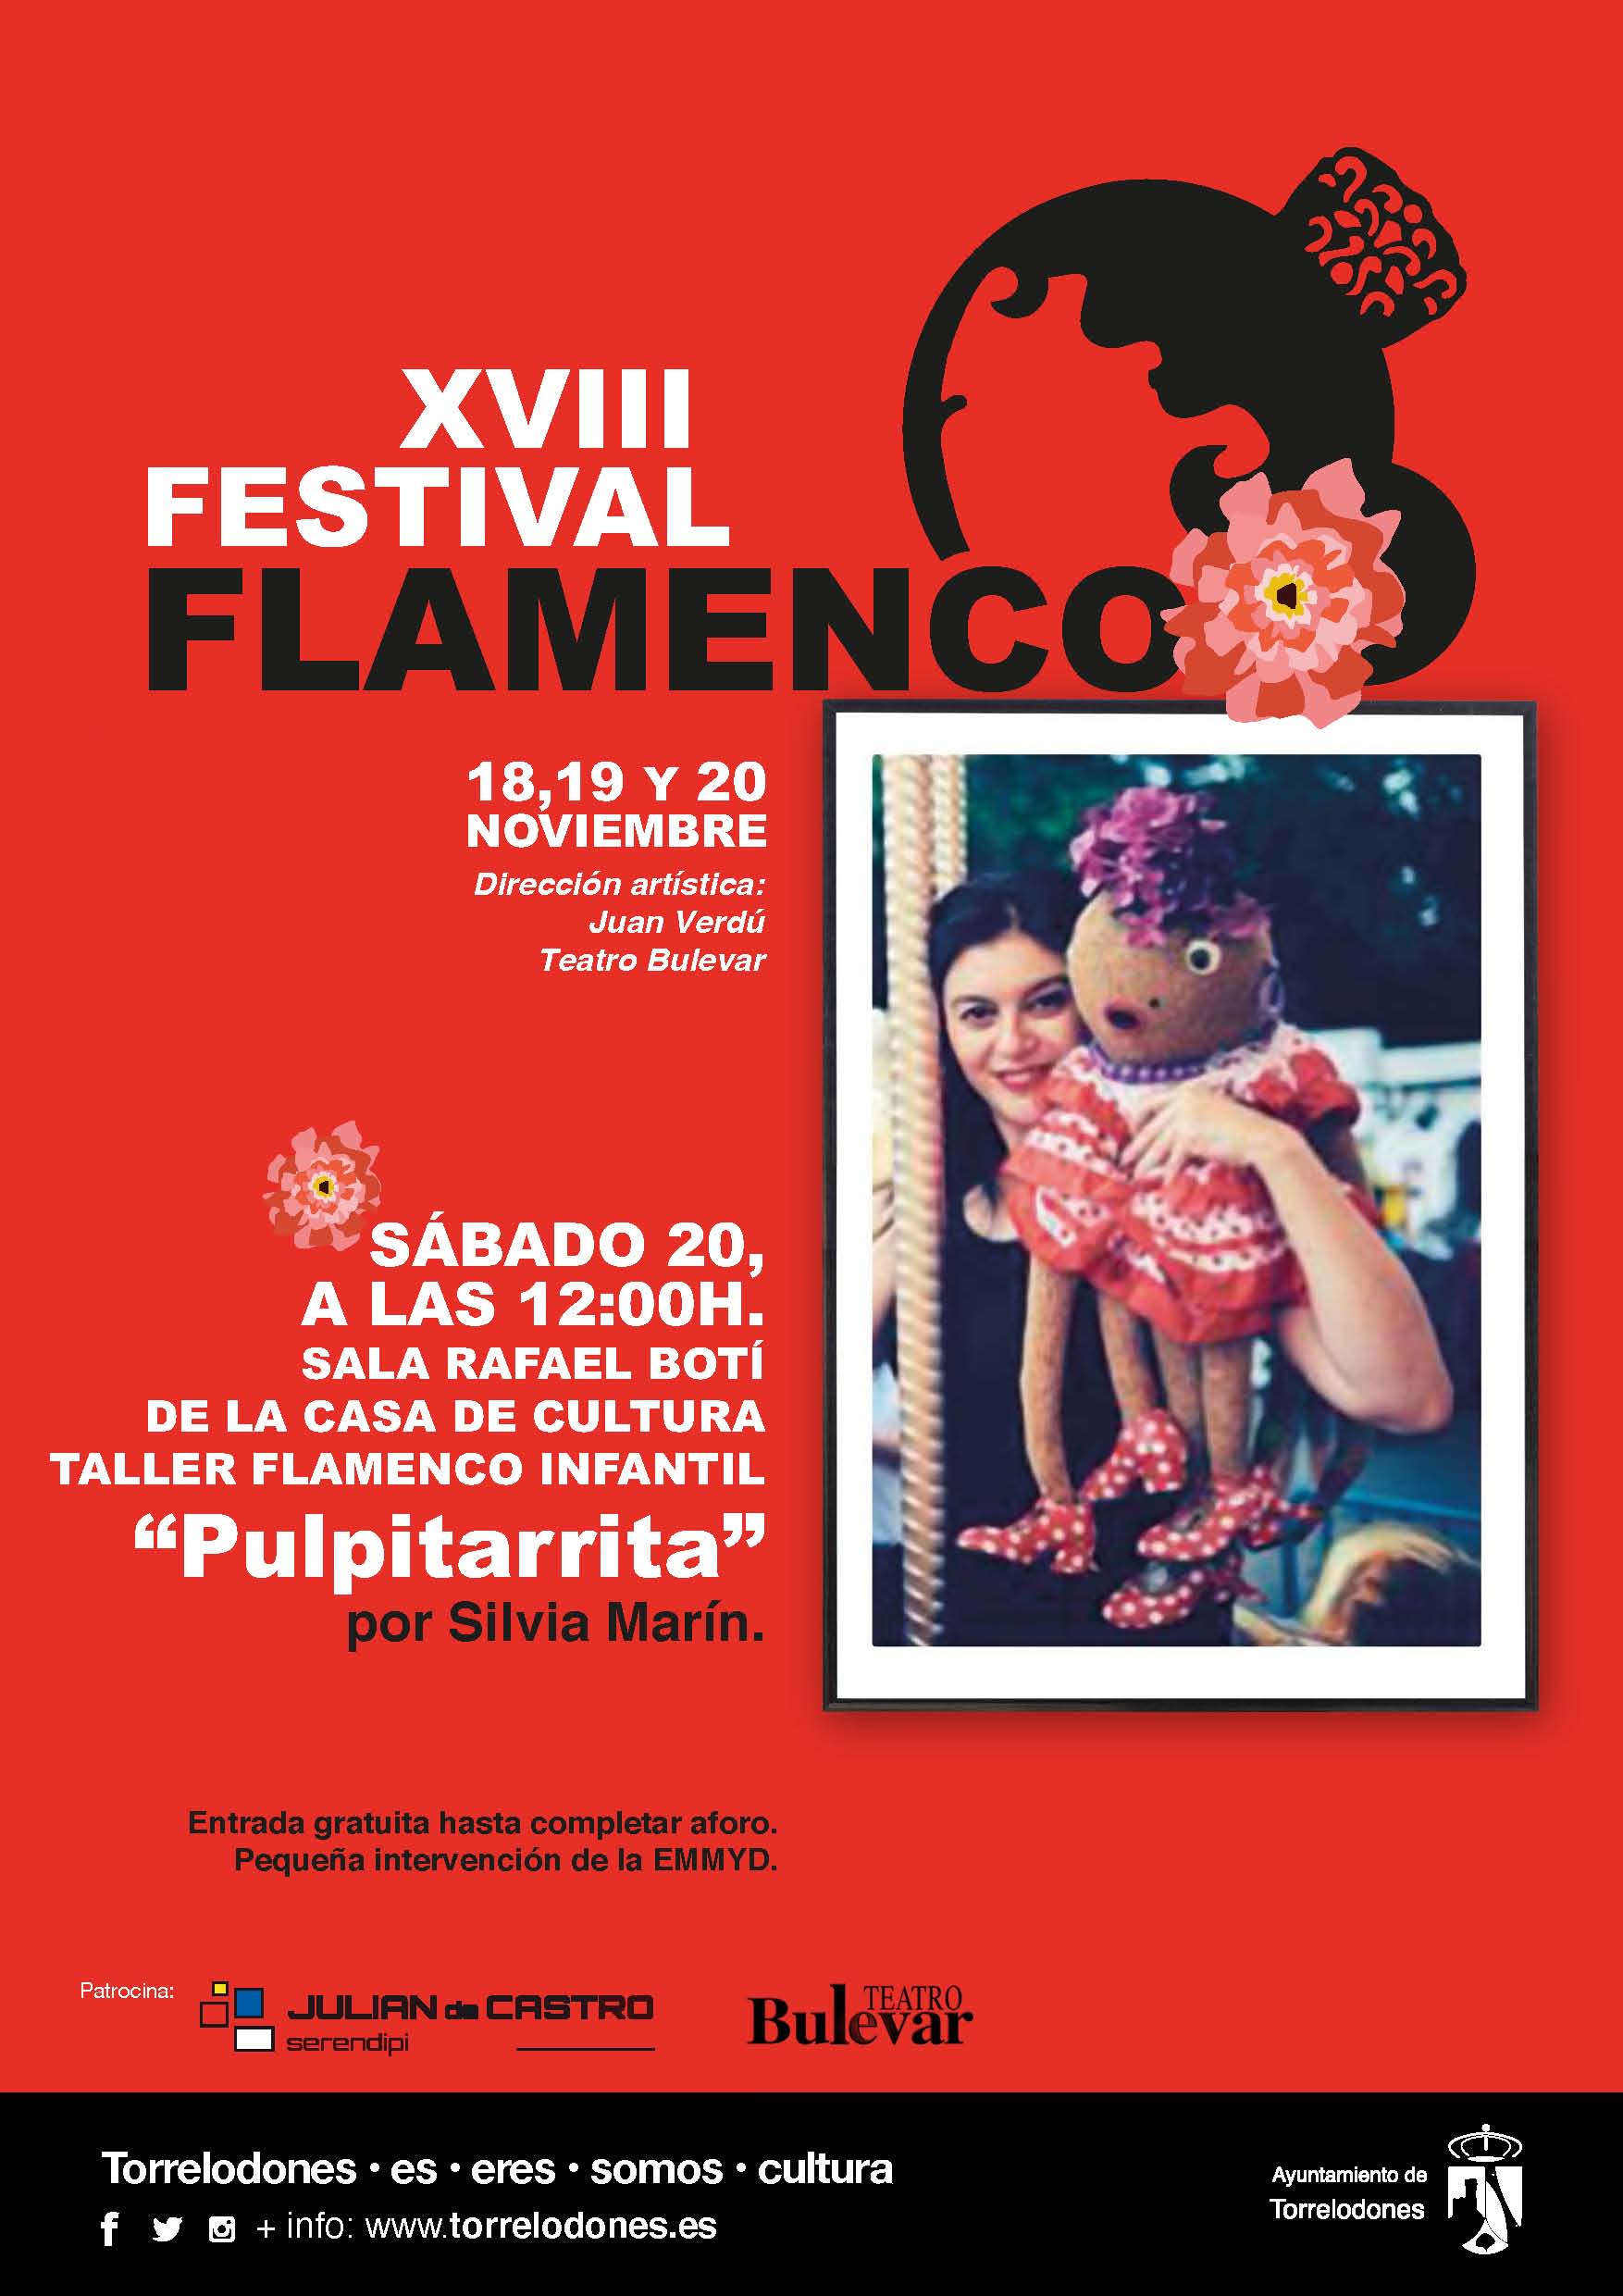 a3 xviii festival flamenco de torre taller infantil 14 10 2111